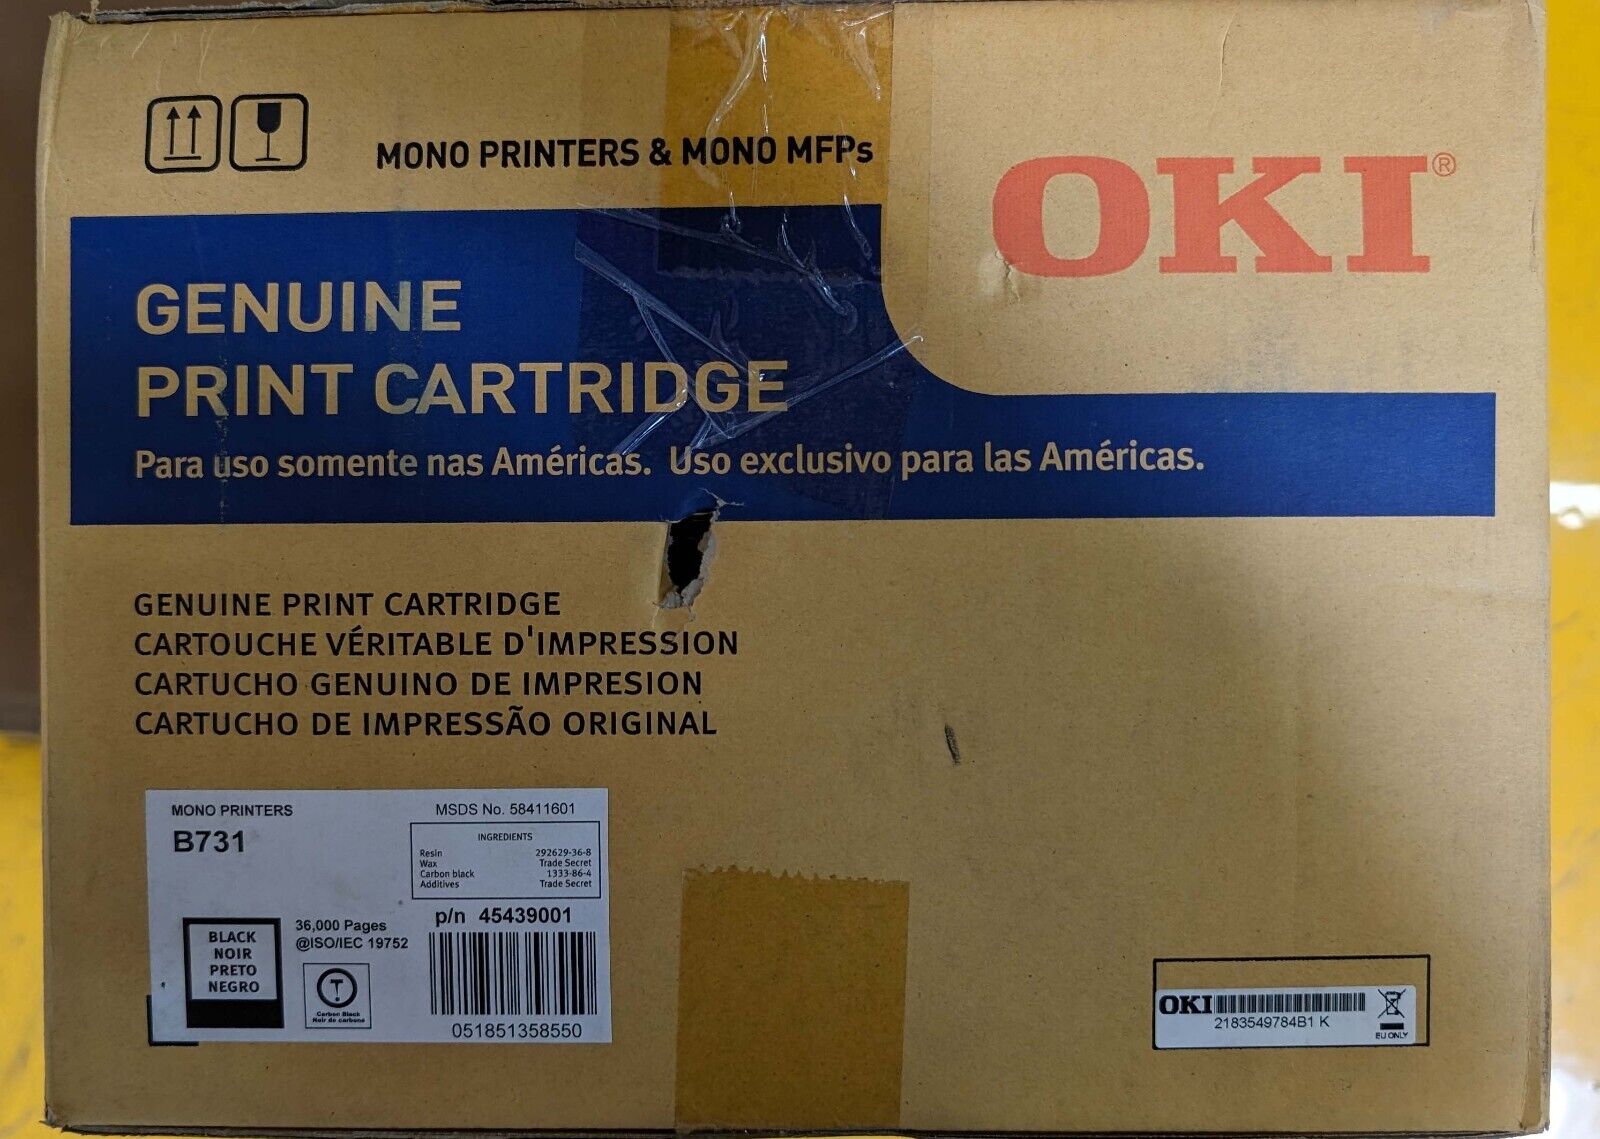 Okidata 45439001 Extra High Yield (36K) Black Toner Cartridge B731dn Printer